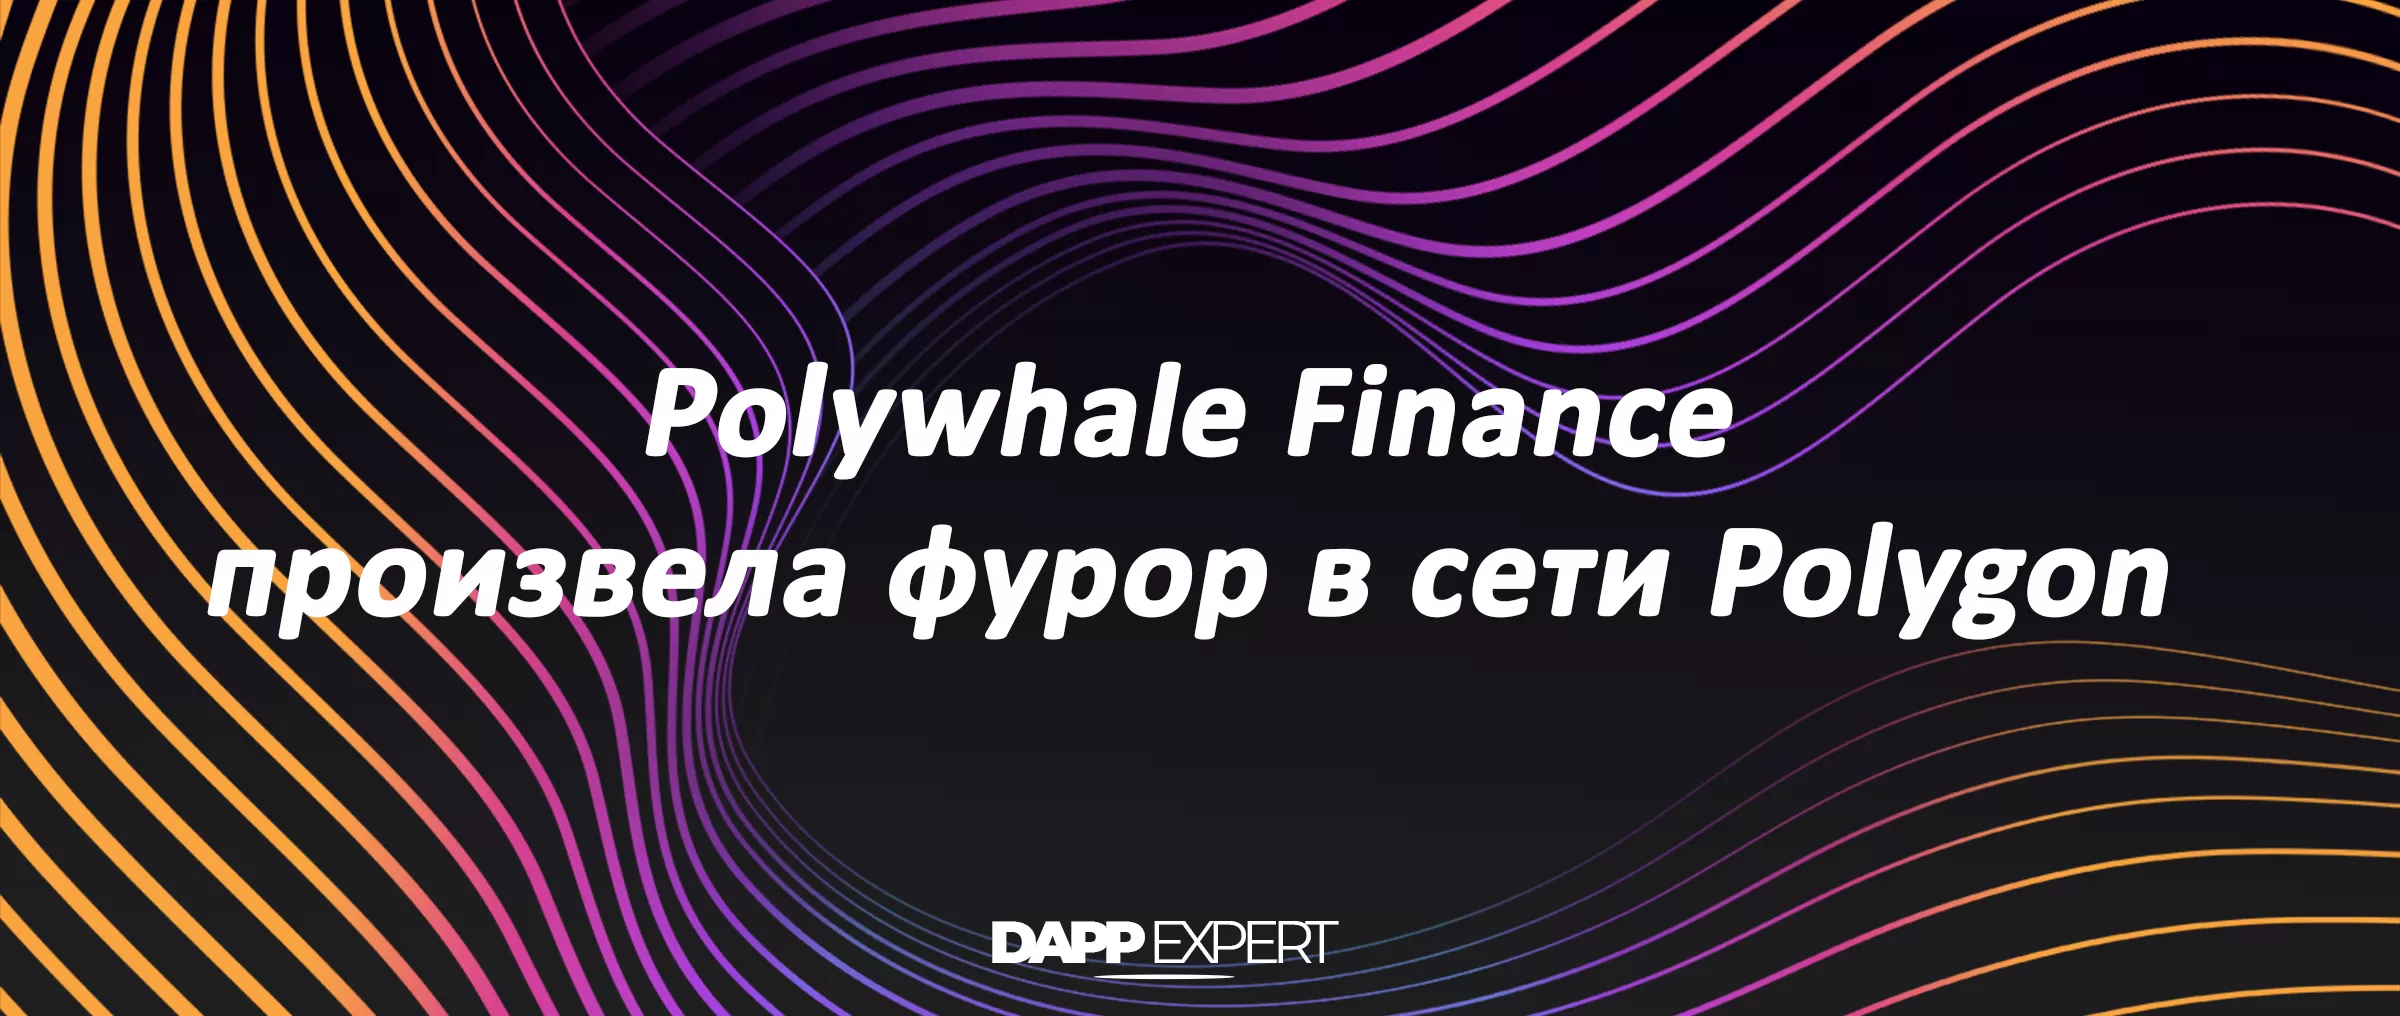 Polywhale Finance  - молниеностный рост в сети Polygon